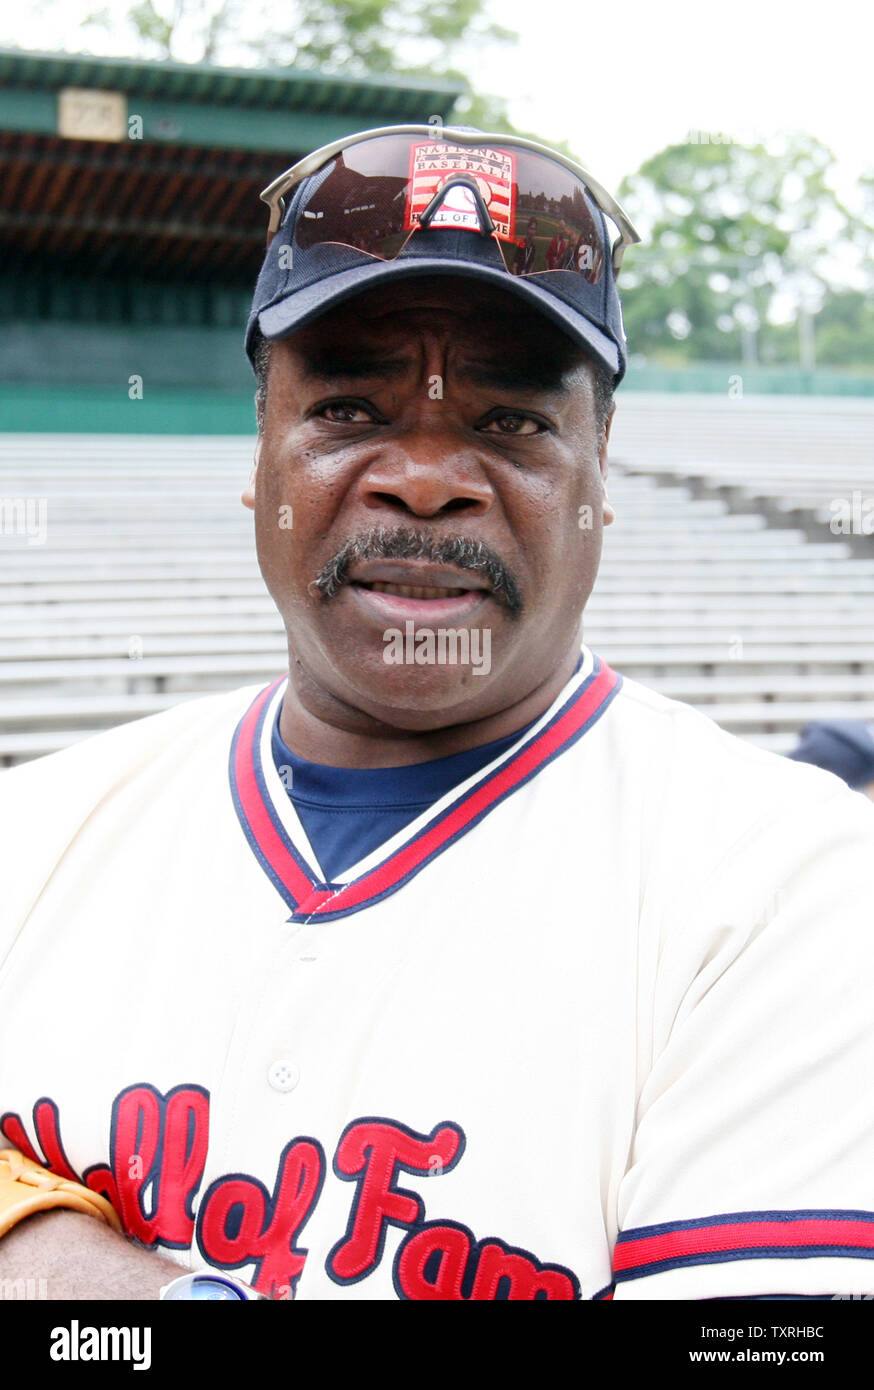 Member of the National Baseball Hall of Fame Eddie Murray, talks